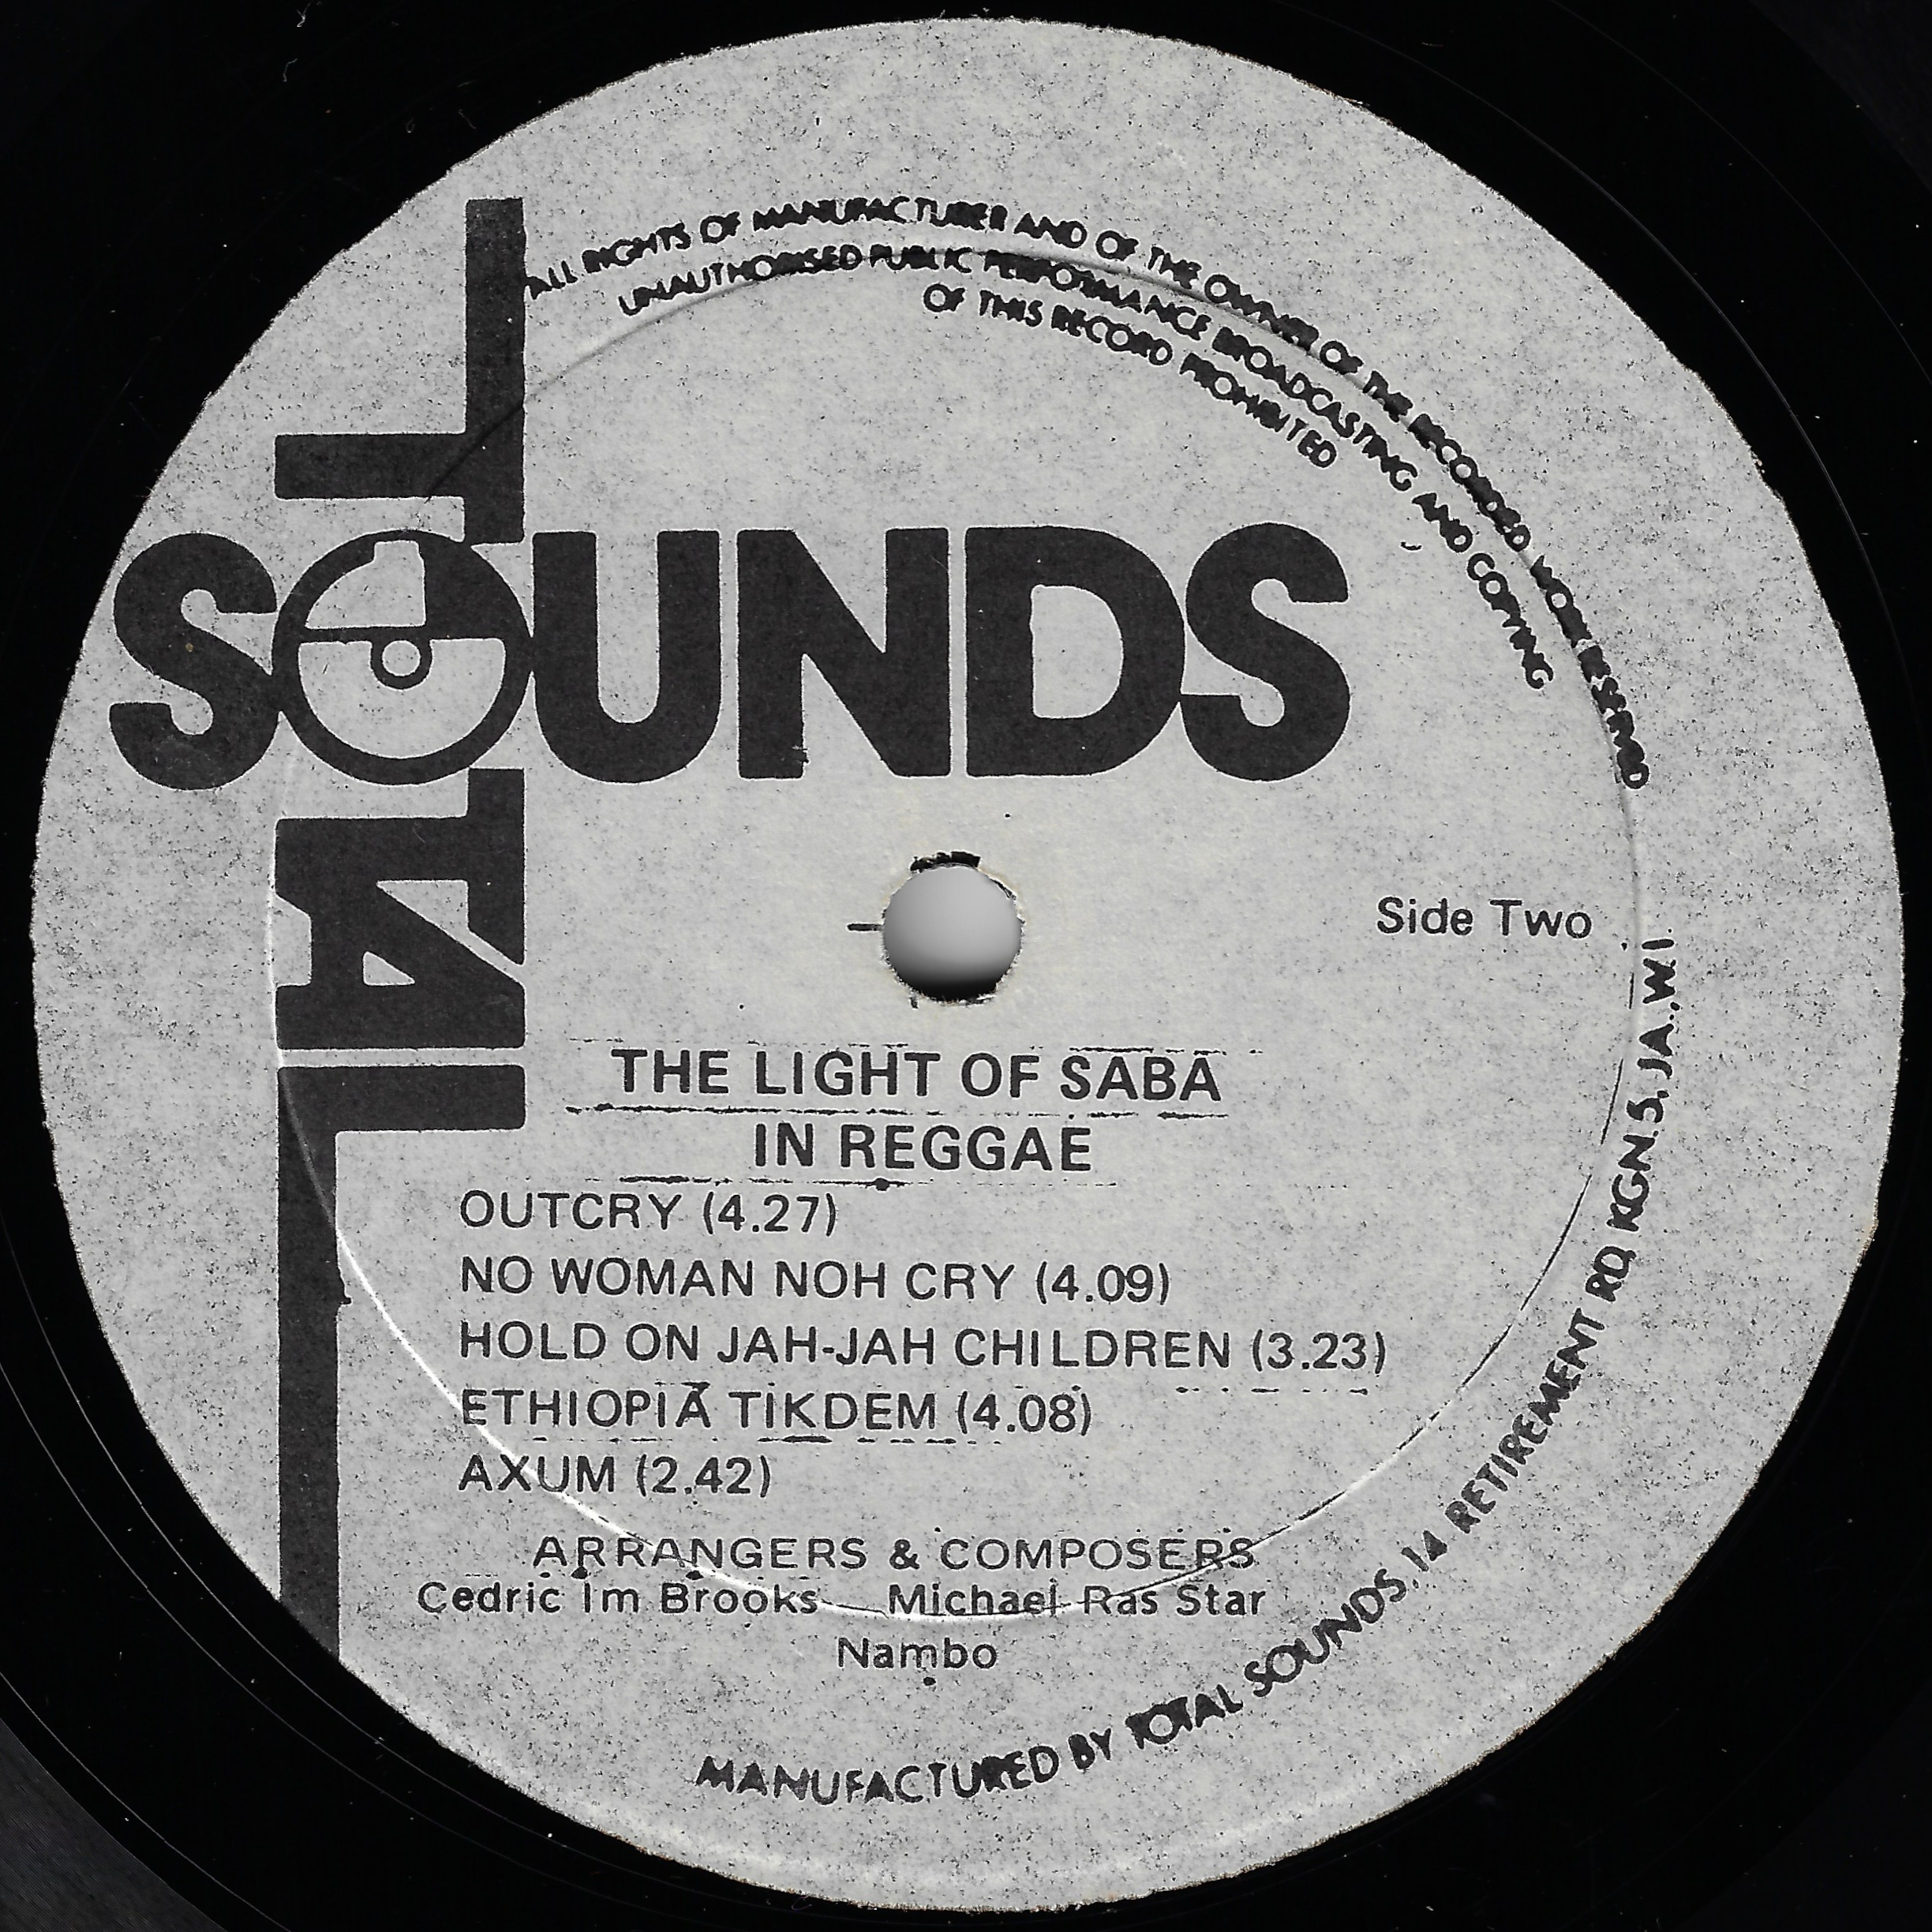 In Reggae - The Light Of Saba